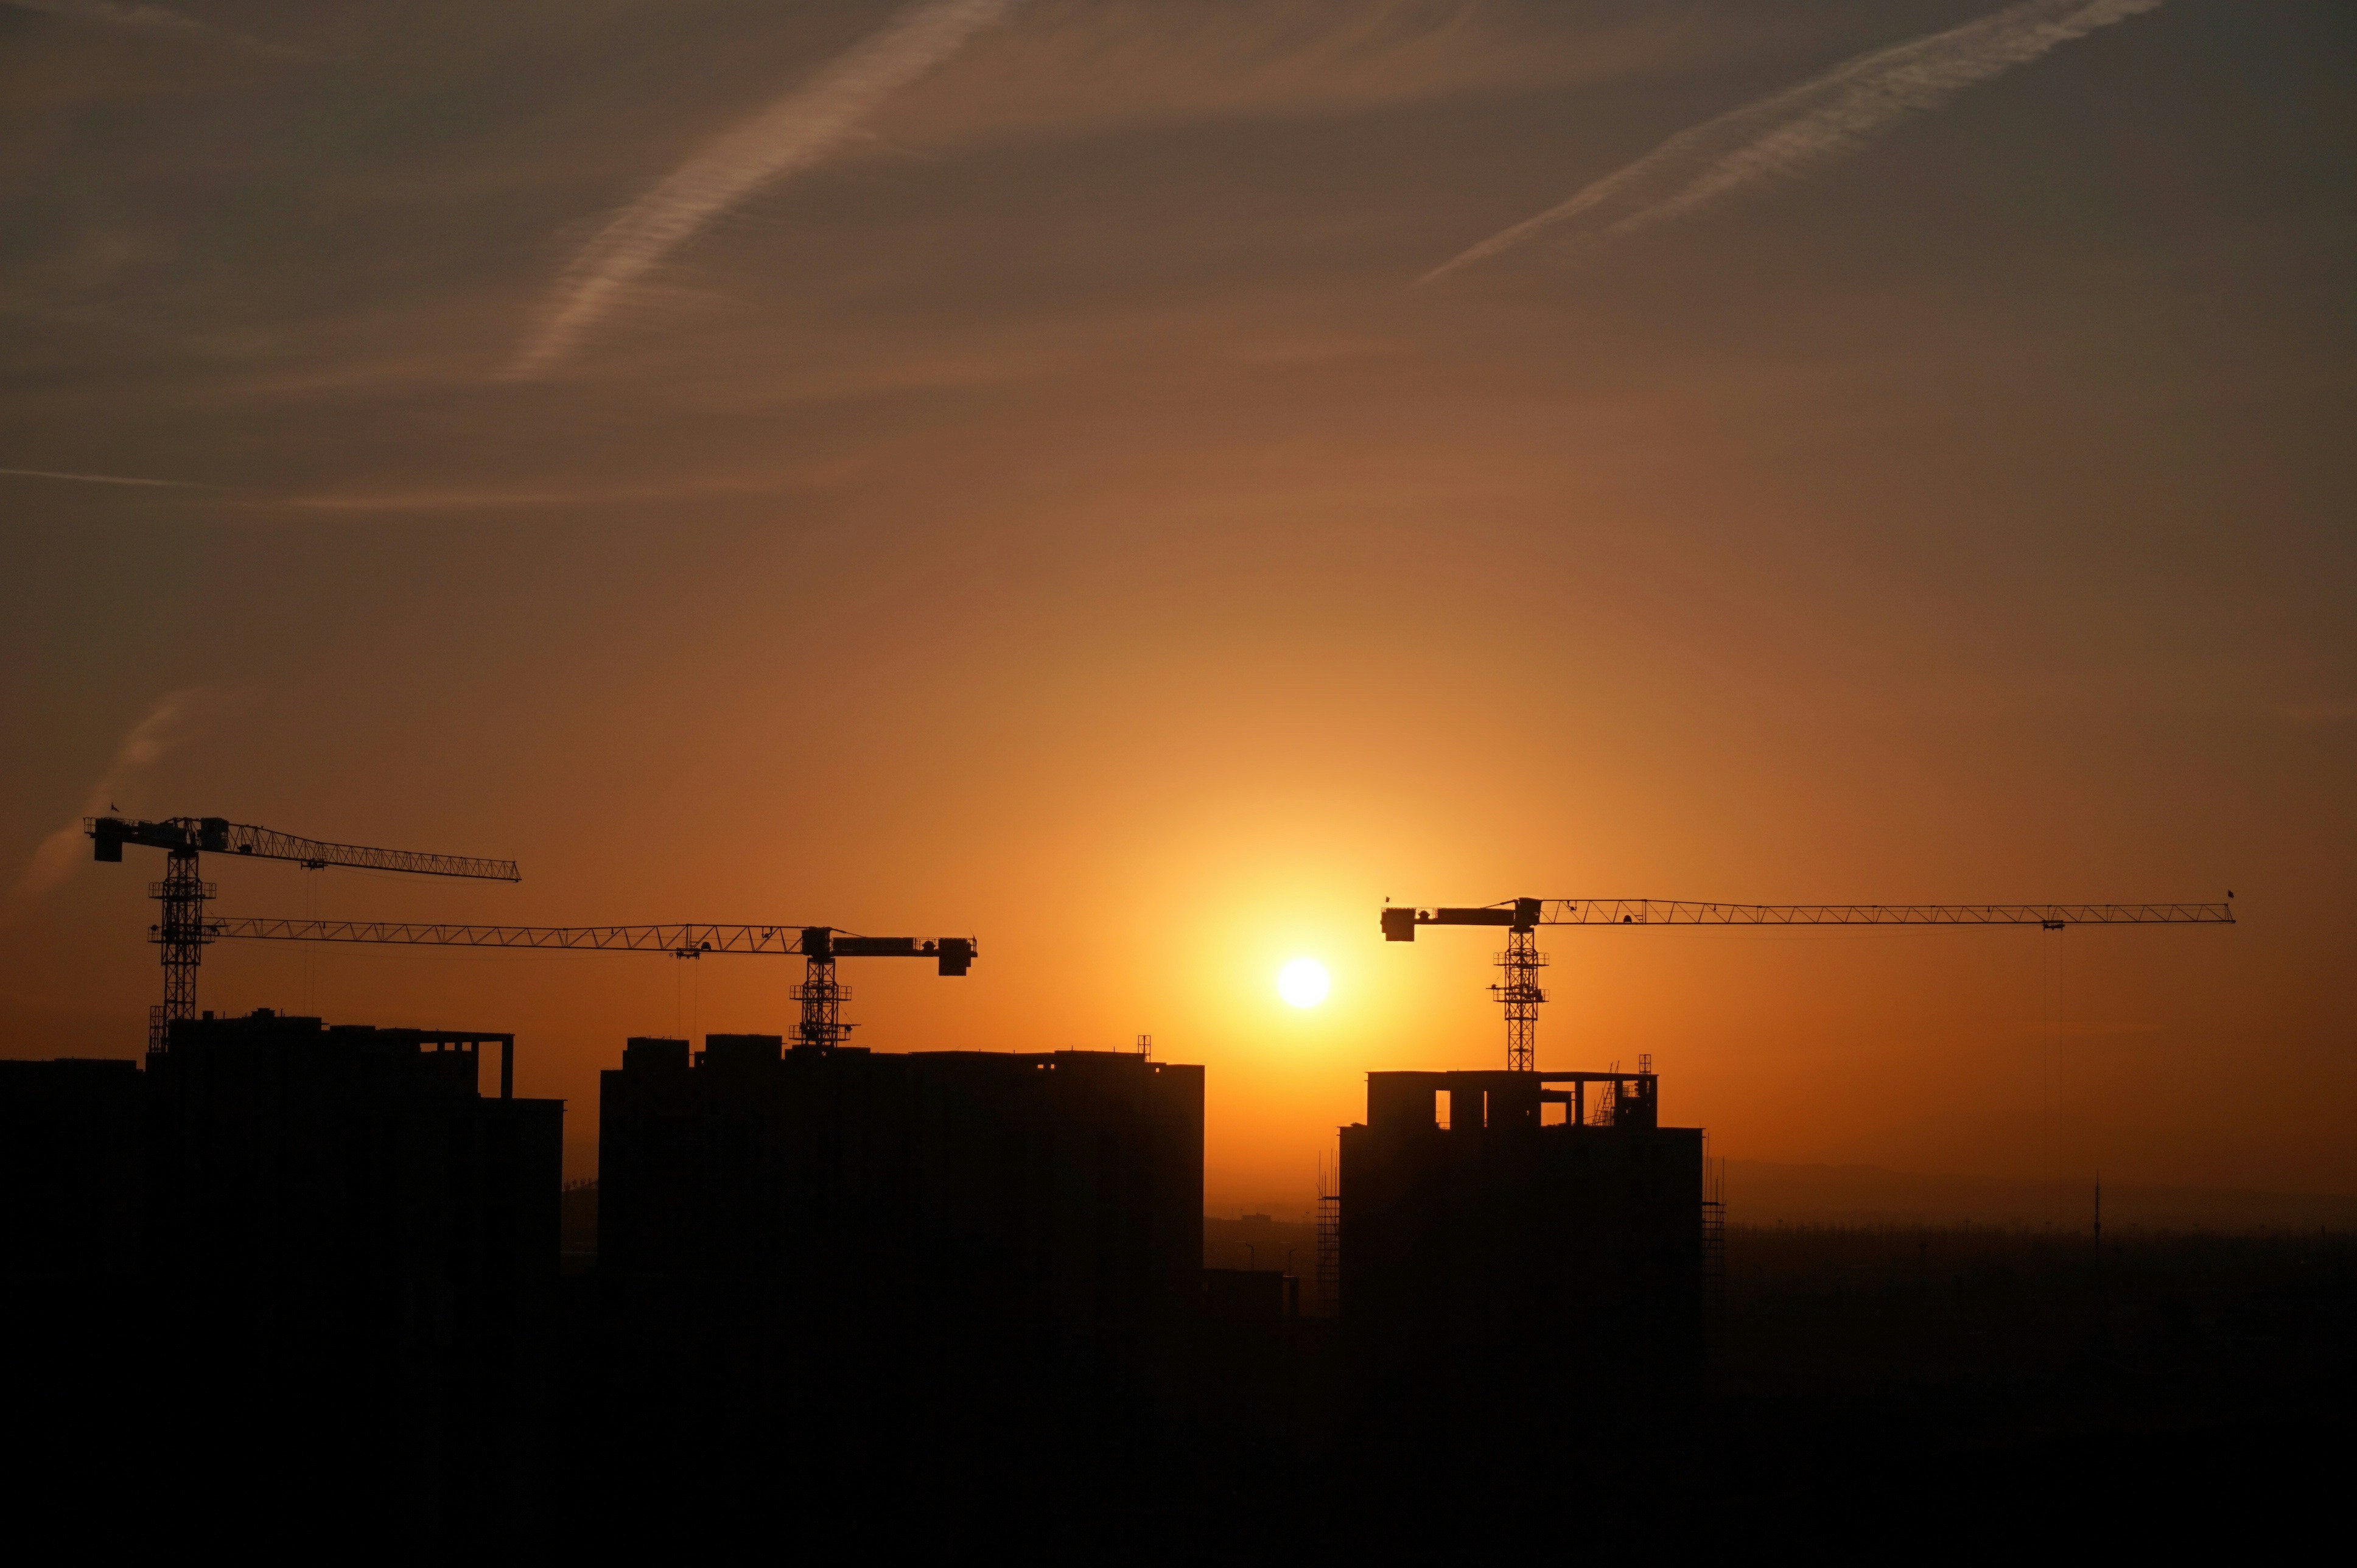 Tower cranes under the sunrise